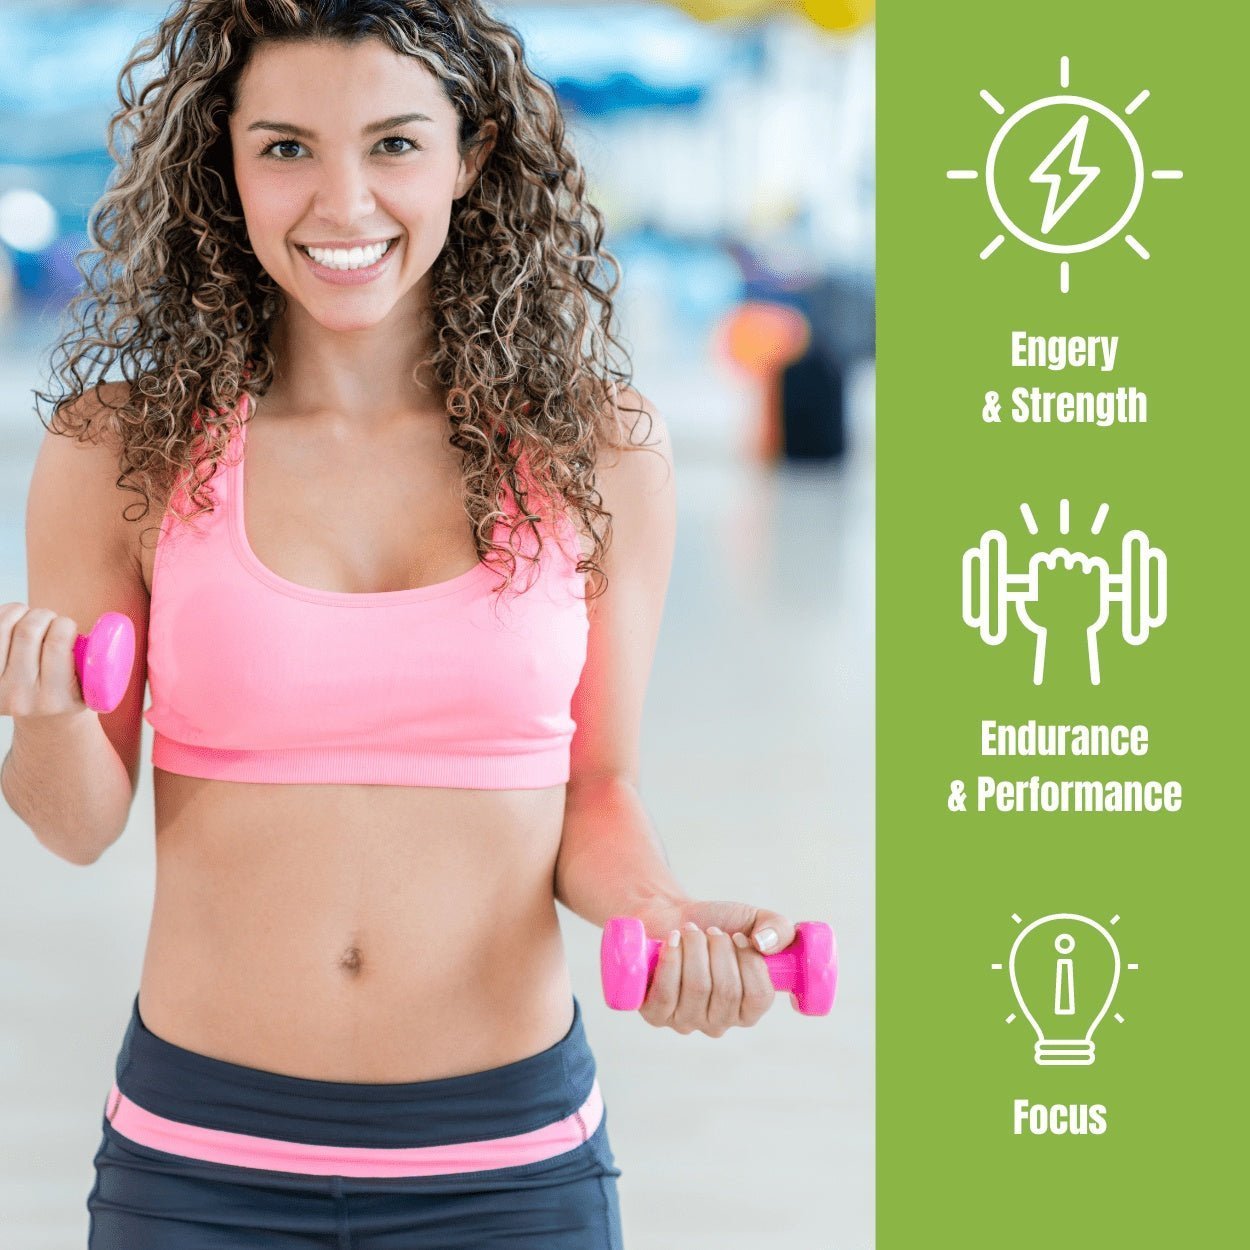 Pre Workout Powder for Endurance & Strength | Honeydew Watermelon | 3-Pack